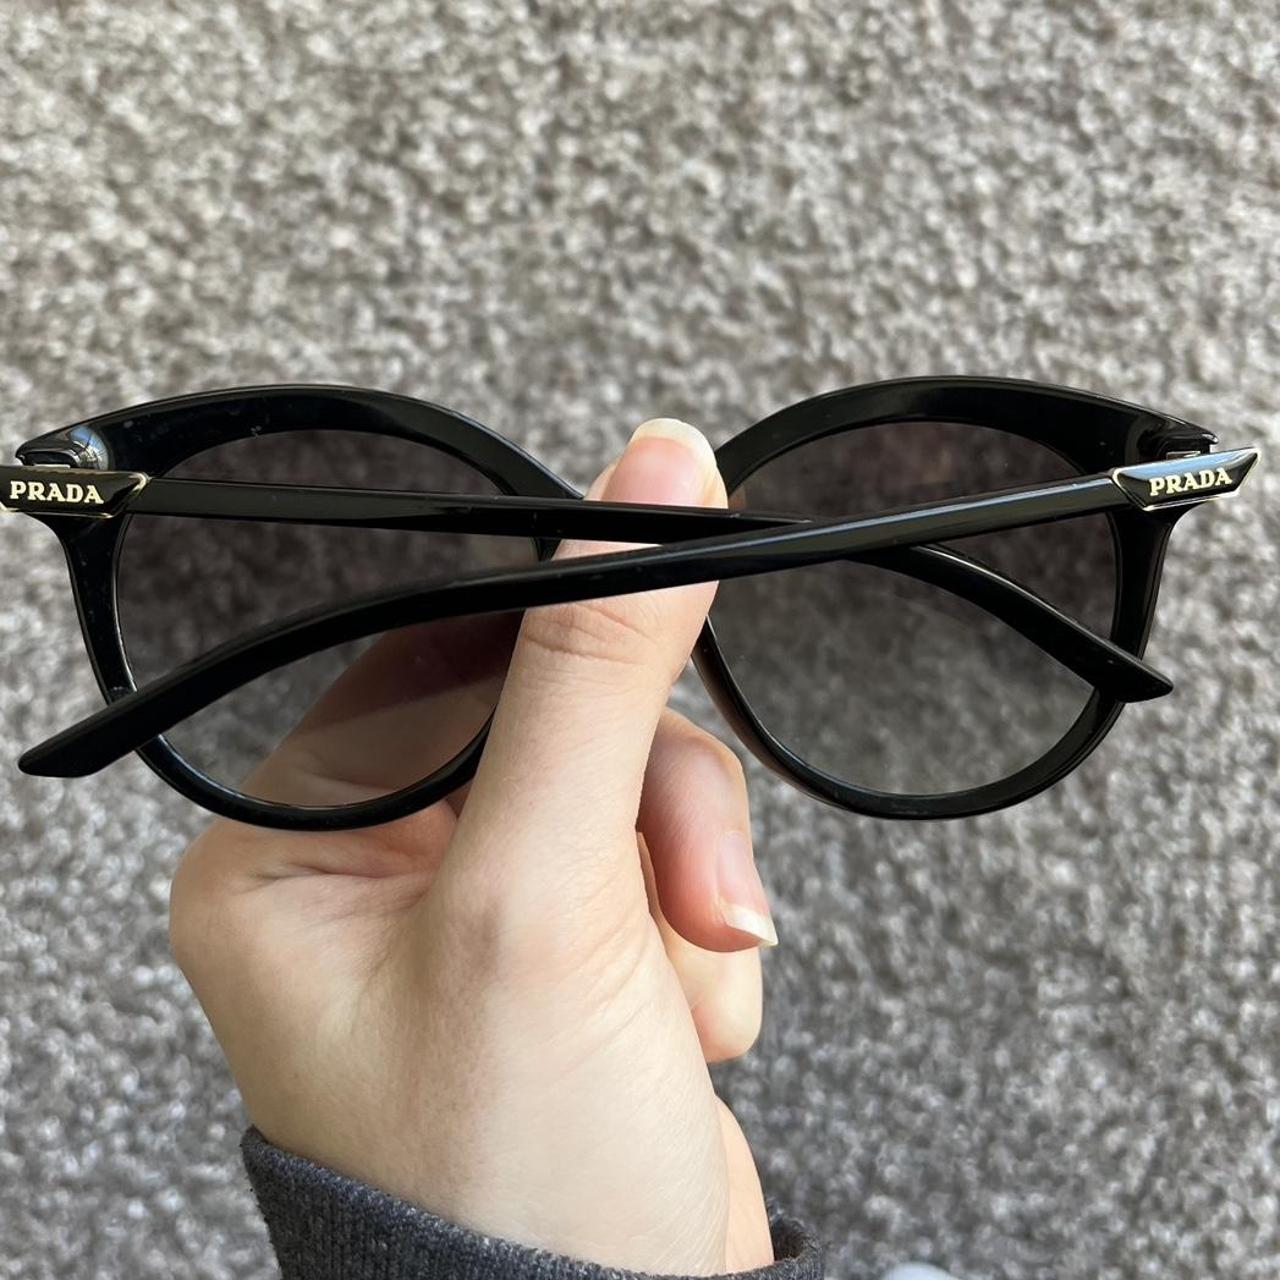 Prada Women's Black Sunglasses | Depop